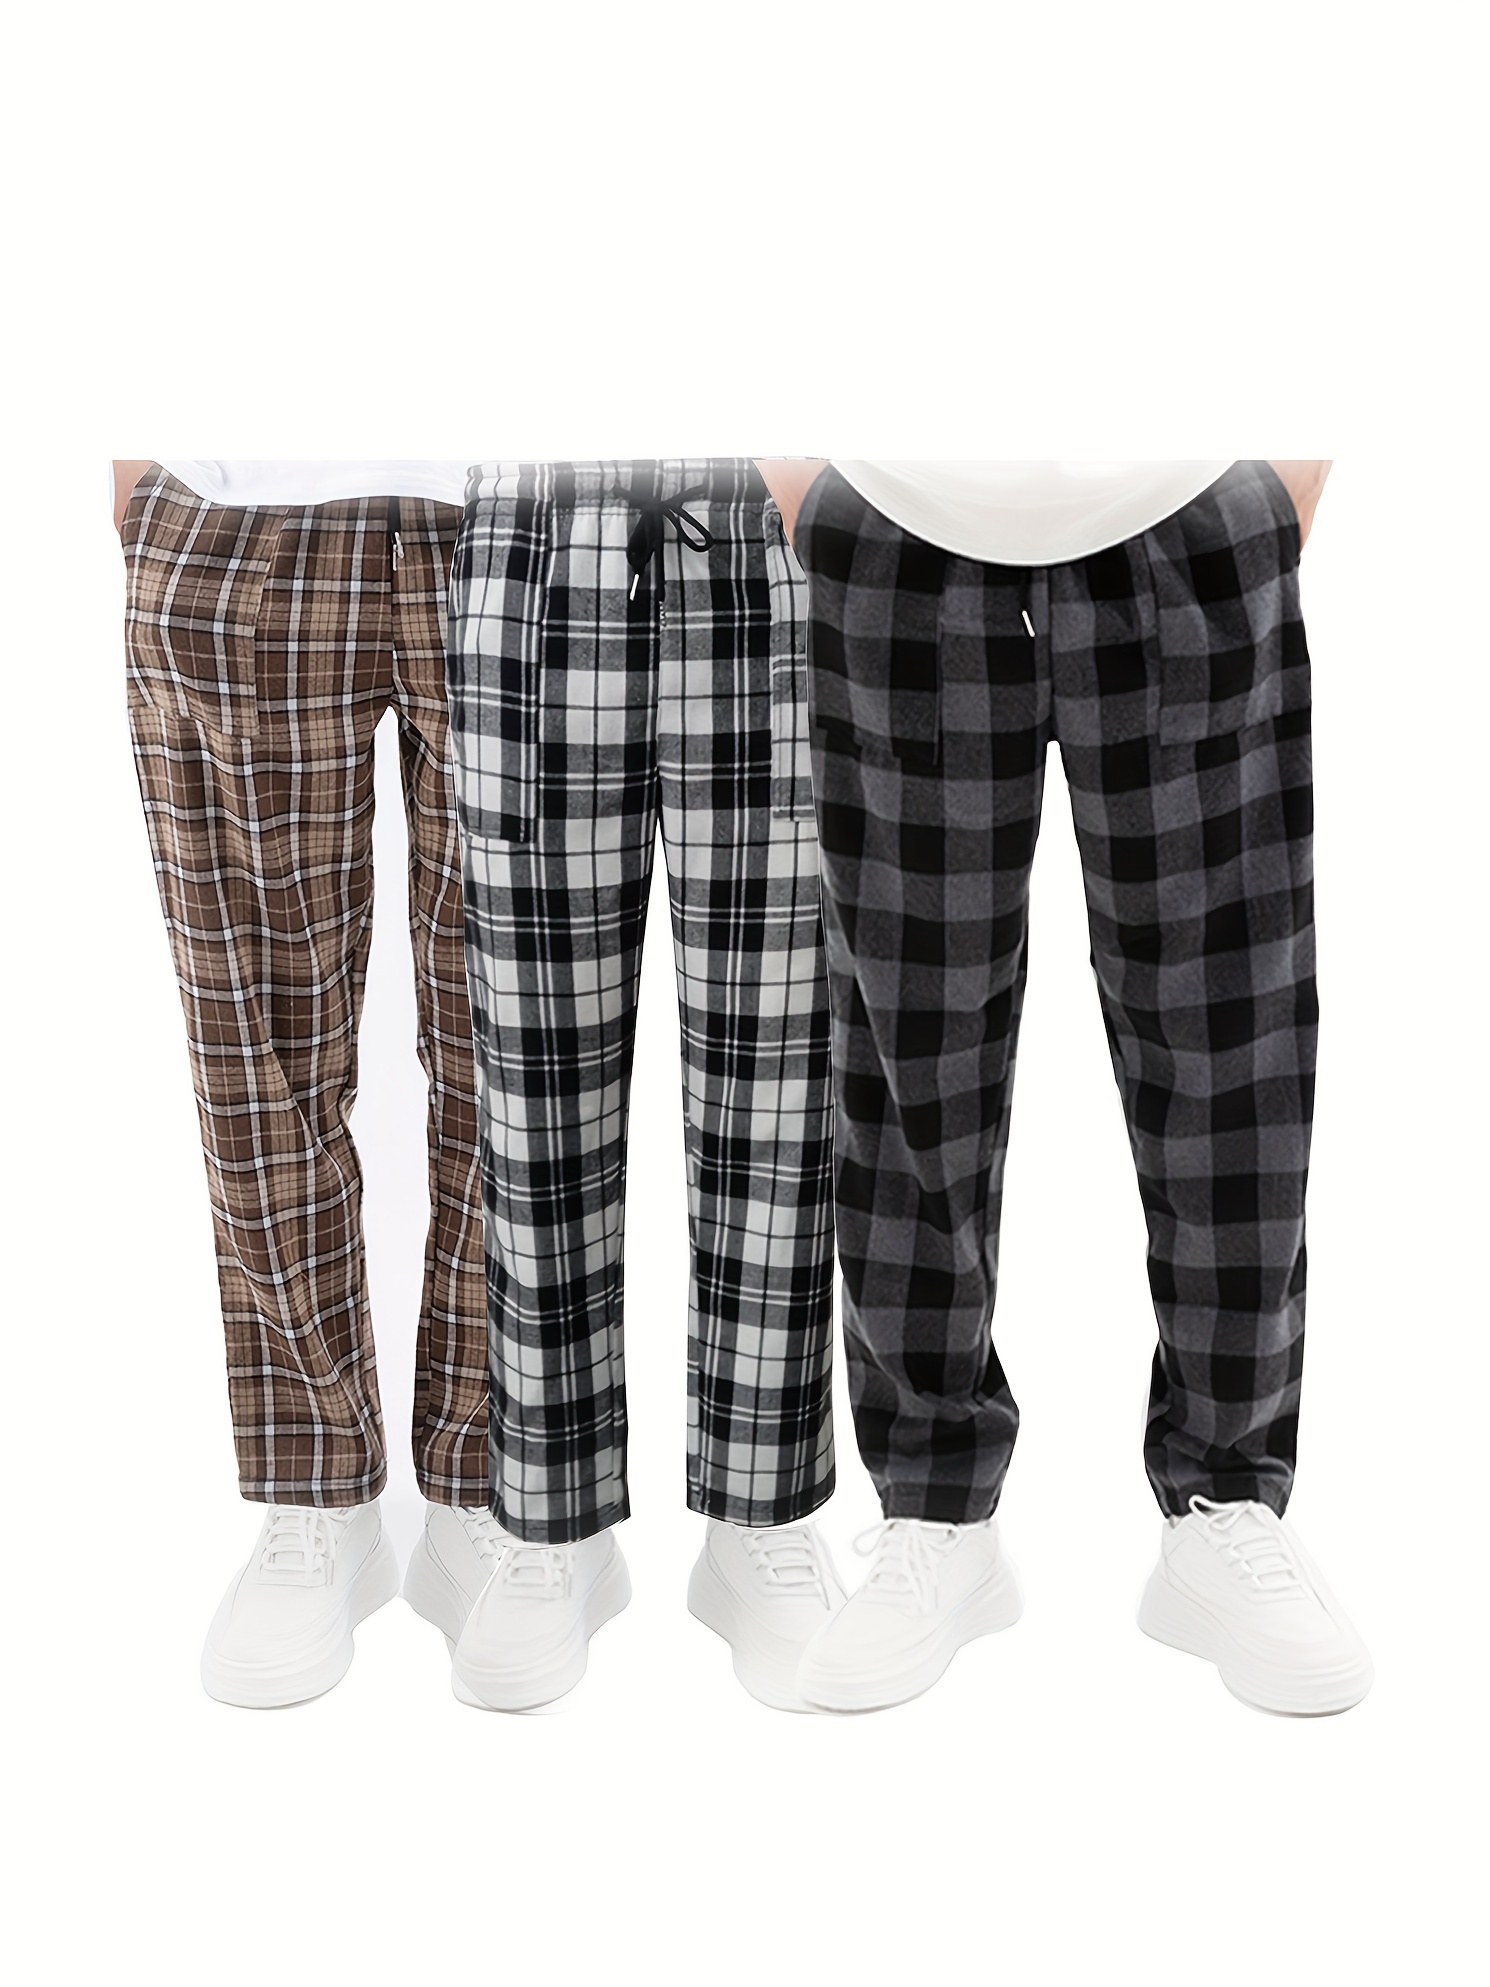 Men's Classic Fashion Casual Plaid Grey Thickened Pants Pajama, Sleep  Bottom, Loungewear Trousers For All Seasons